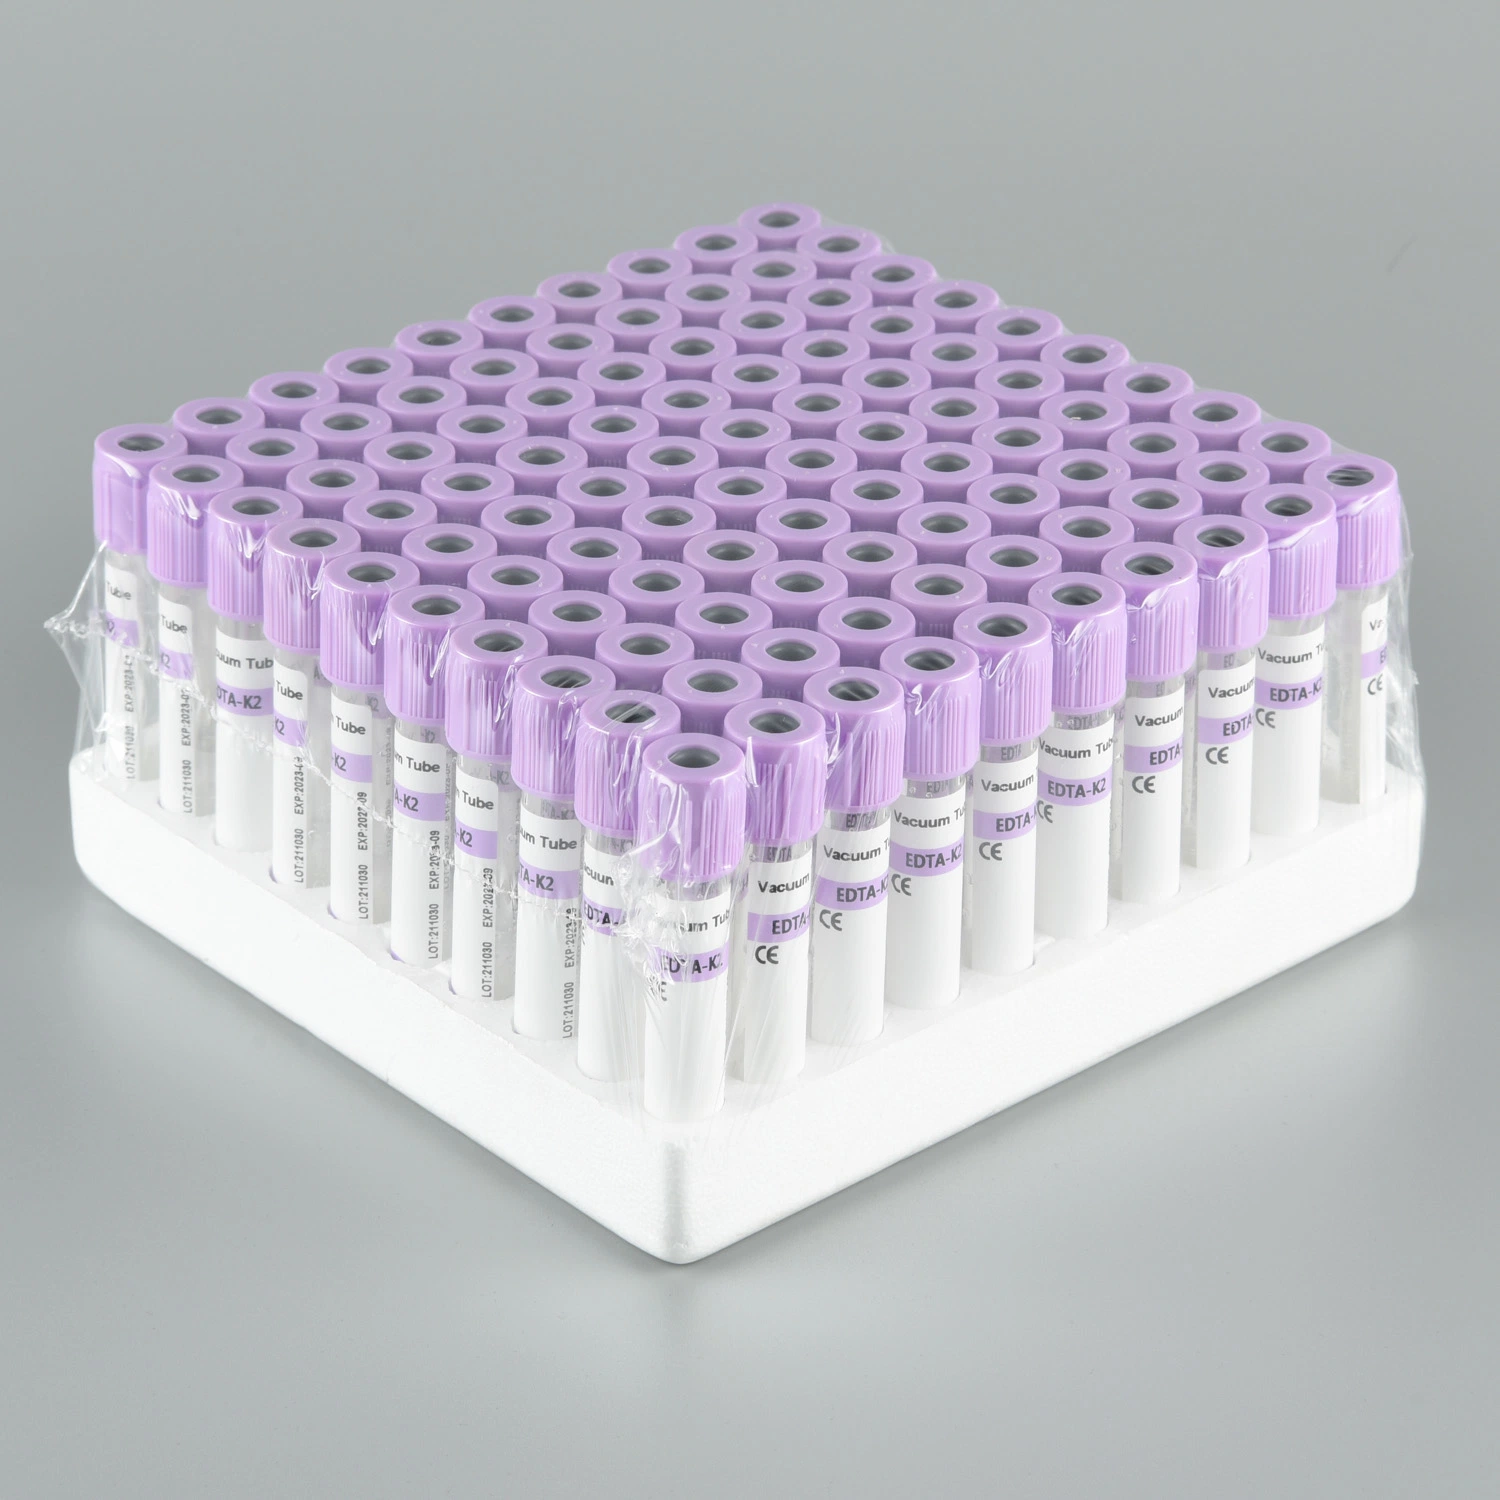 Siny 2-10 ml Edtak2 desechable de Presión Negativa la tapa de color púrpura de sangre de rutina en la sangre anticoagulante de aspiración vacío tubo Tubo de extracción de sangre